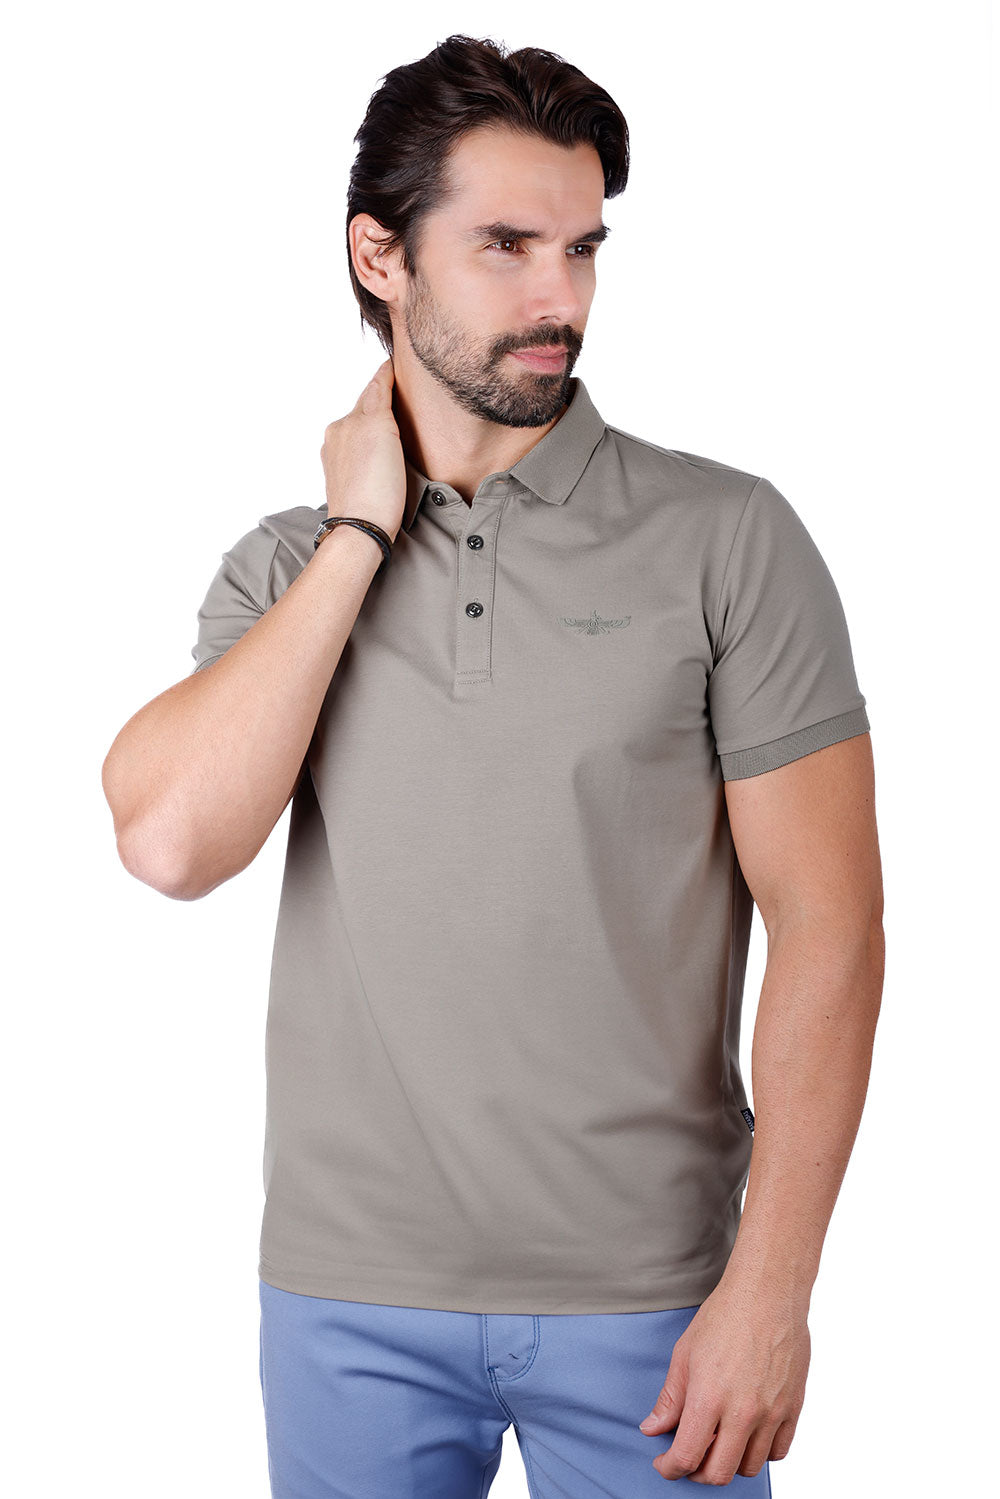 Barabas Men's Solid Color Premium Short Sleeve Logo polo Shirts 3PS128 Charcoal